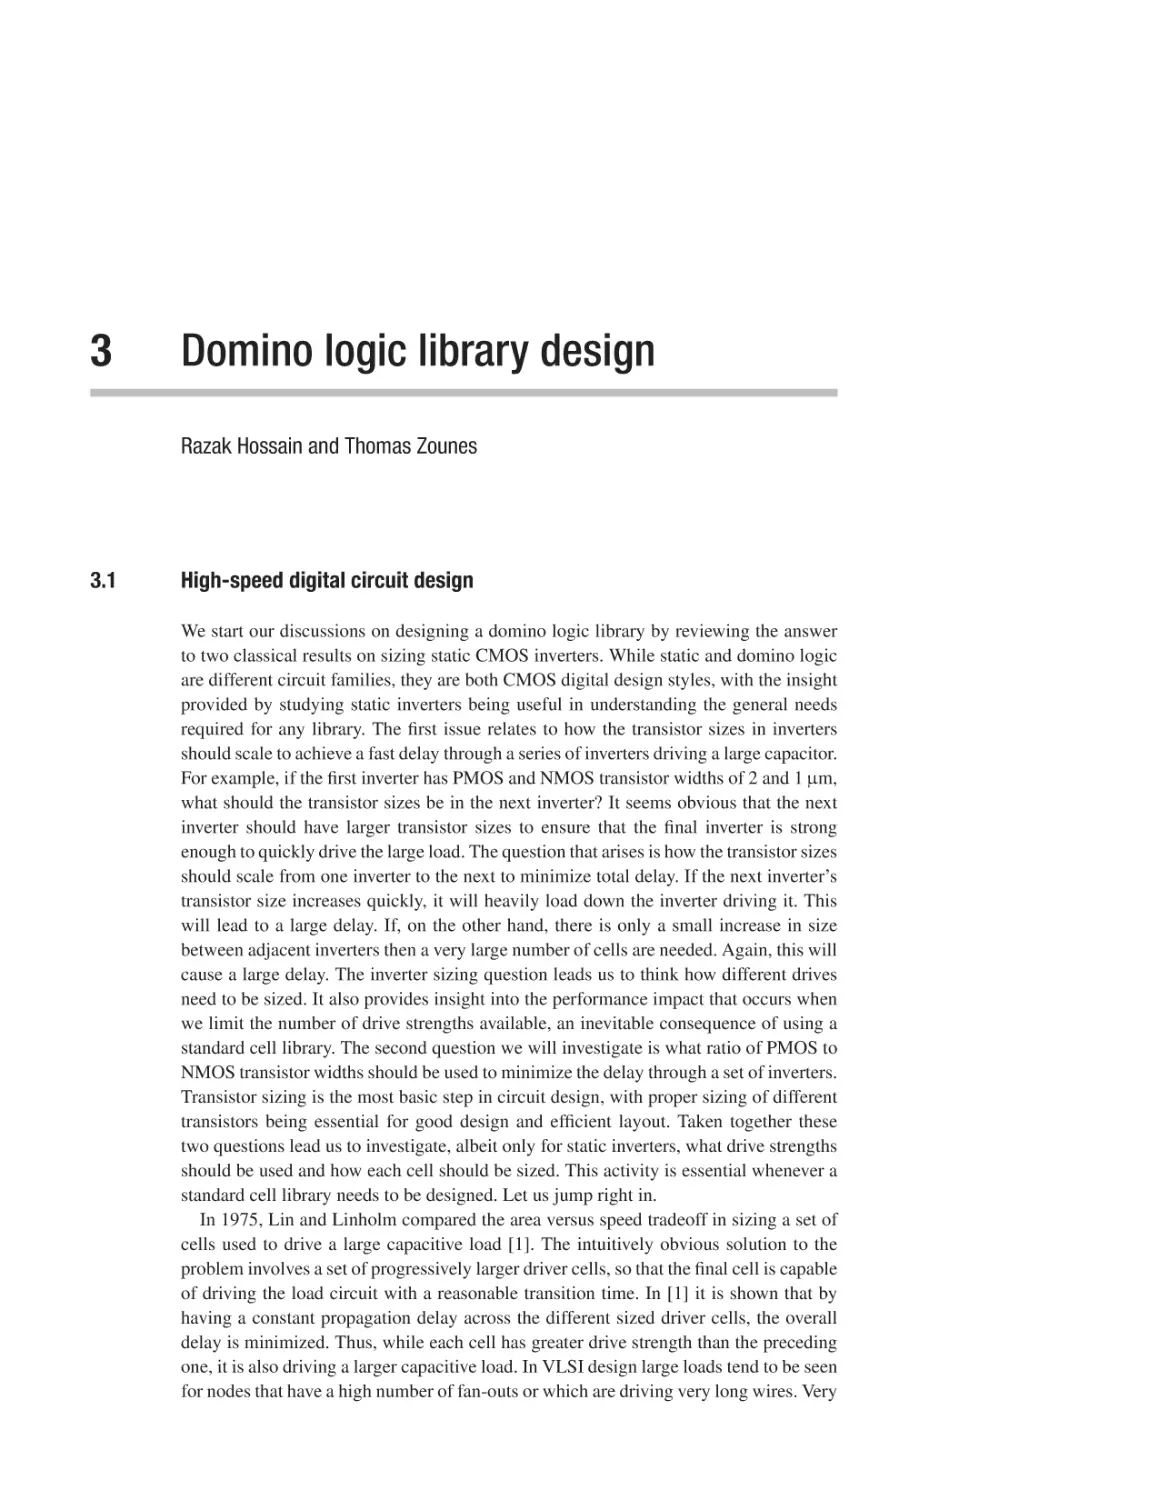 3 Domino logic library design
3.1 High-speed digital circuit design